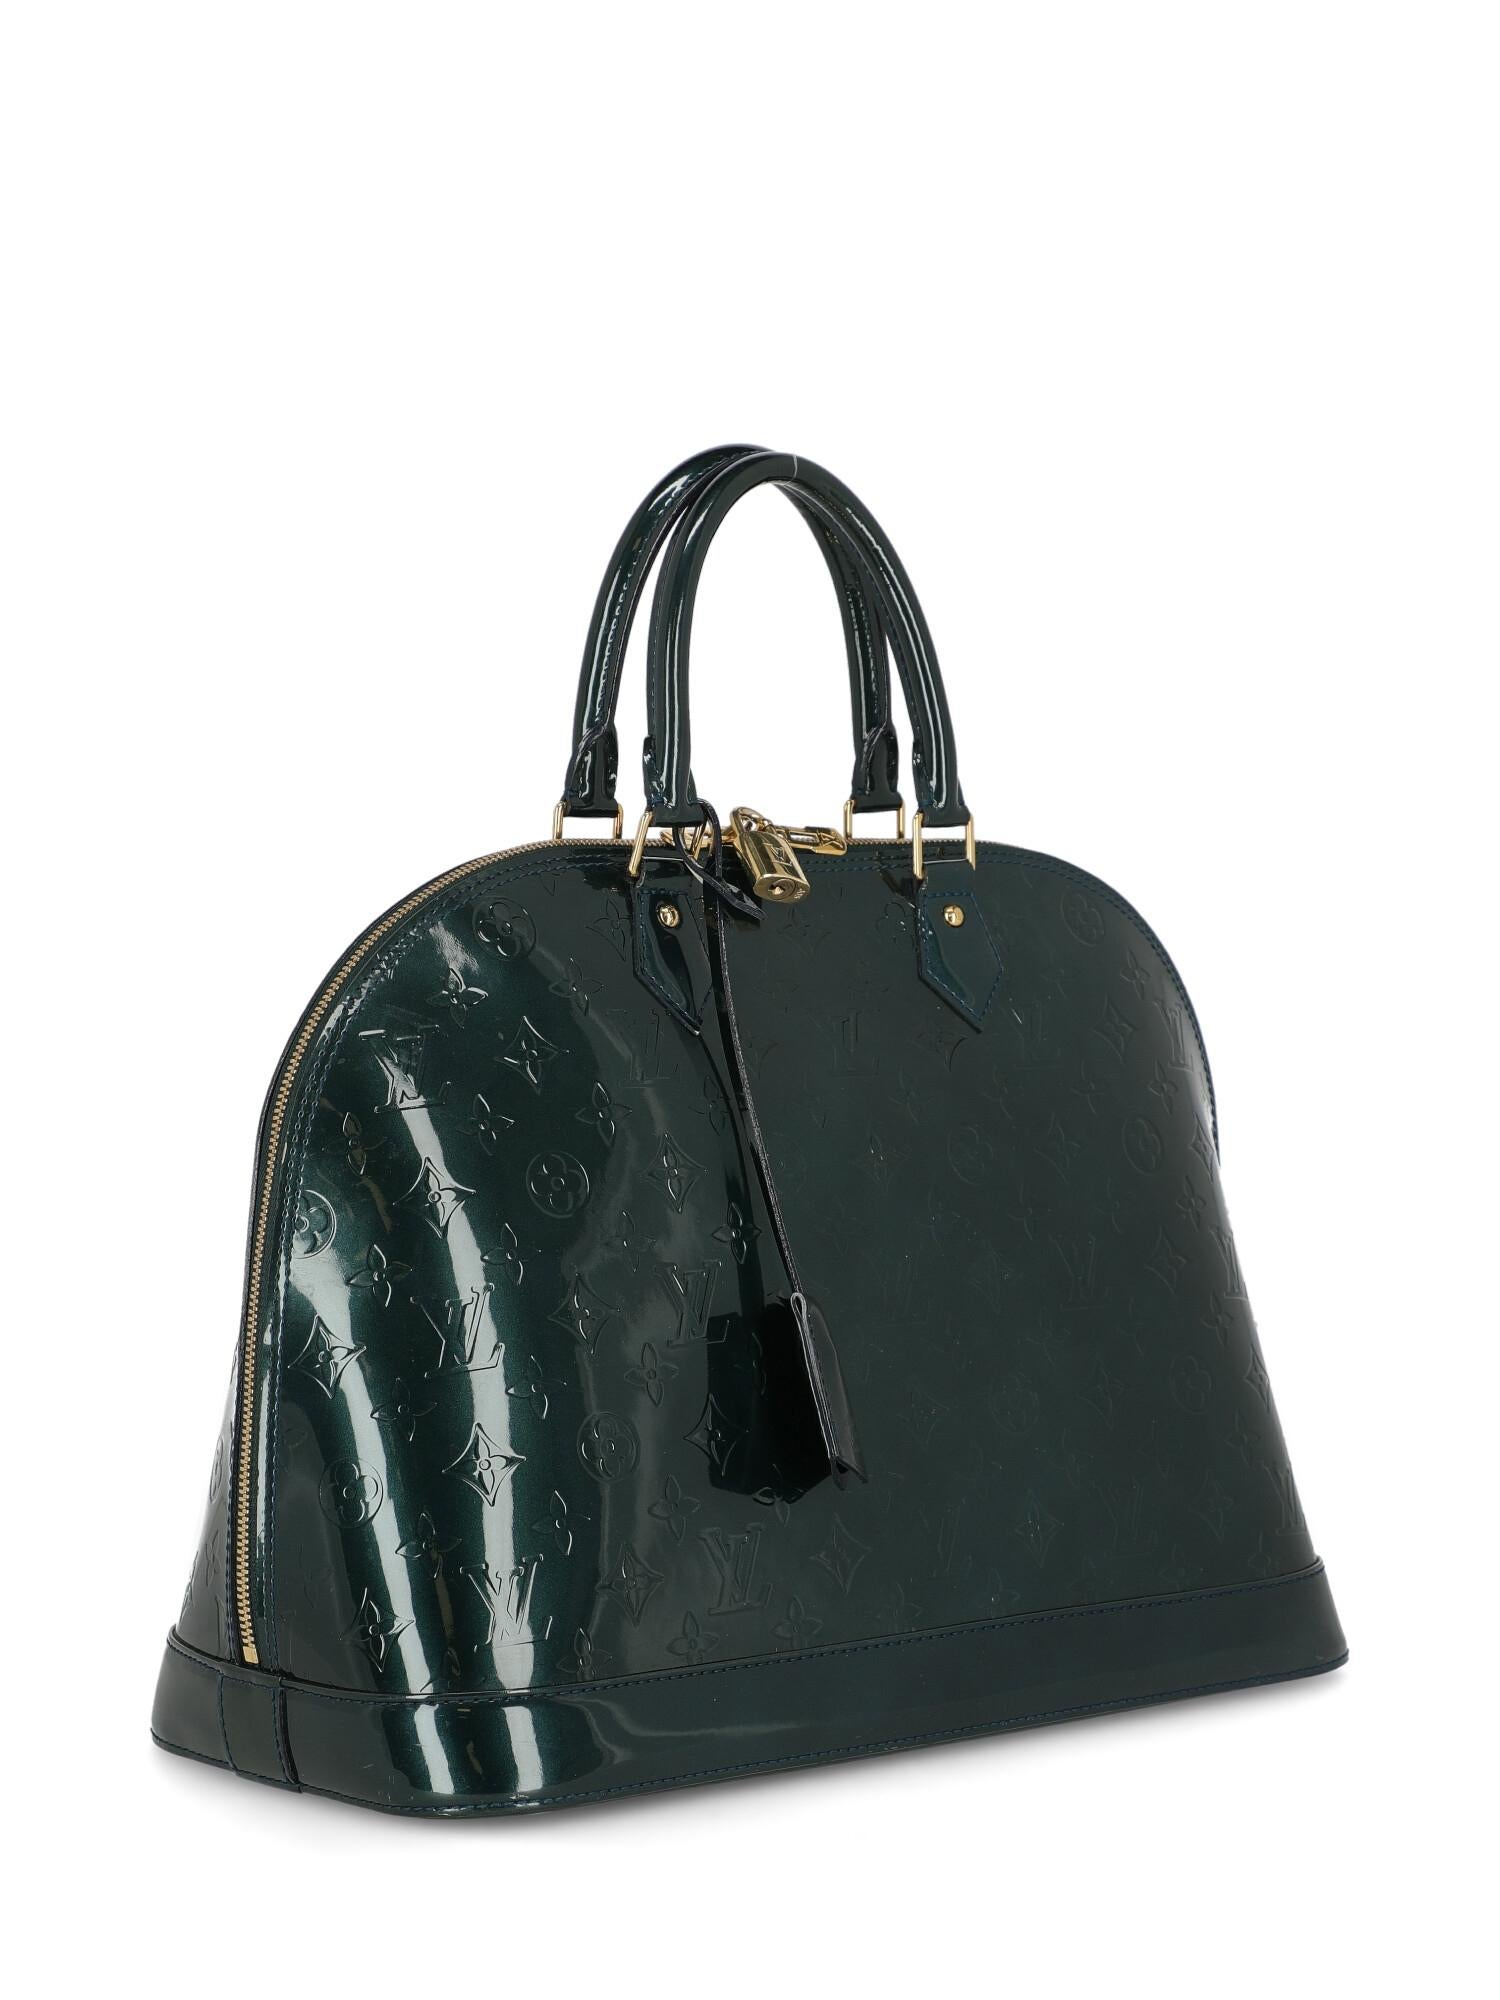 Black Louis Vuitton Women's Handbag Alma Green Leather For Sale